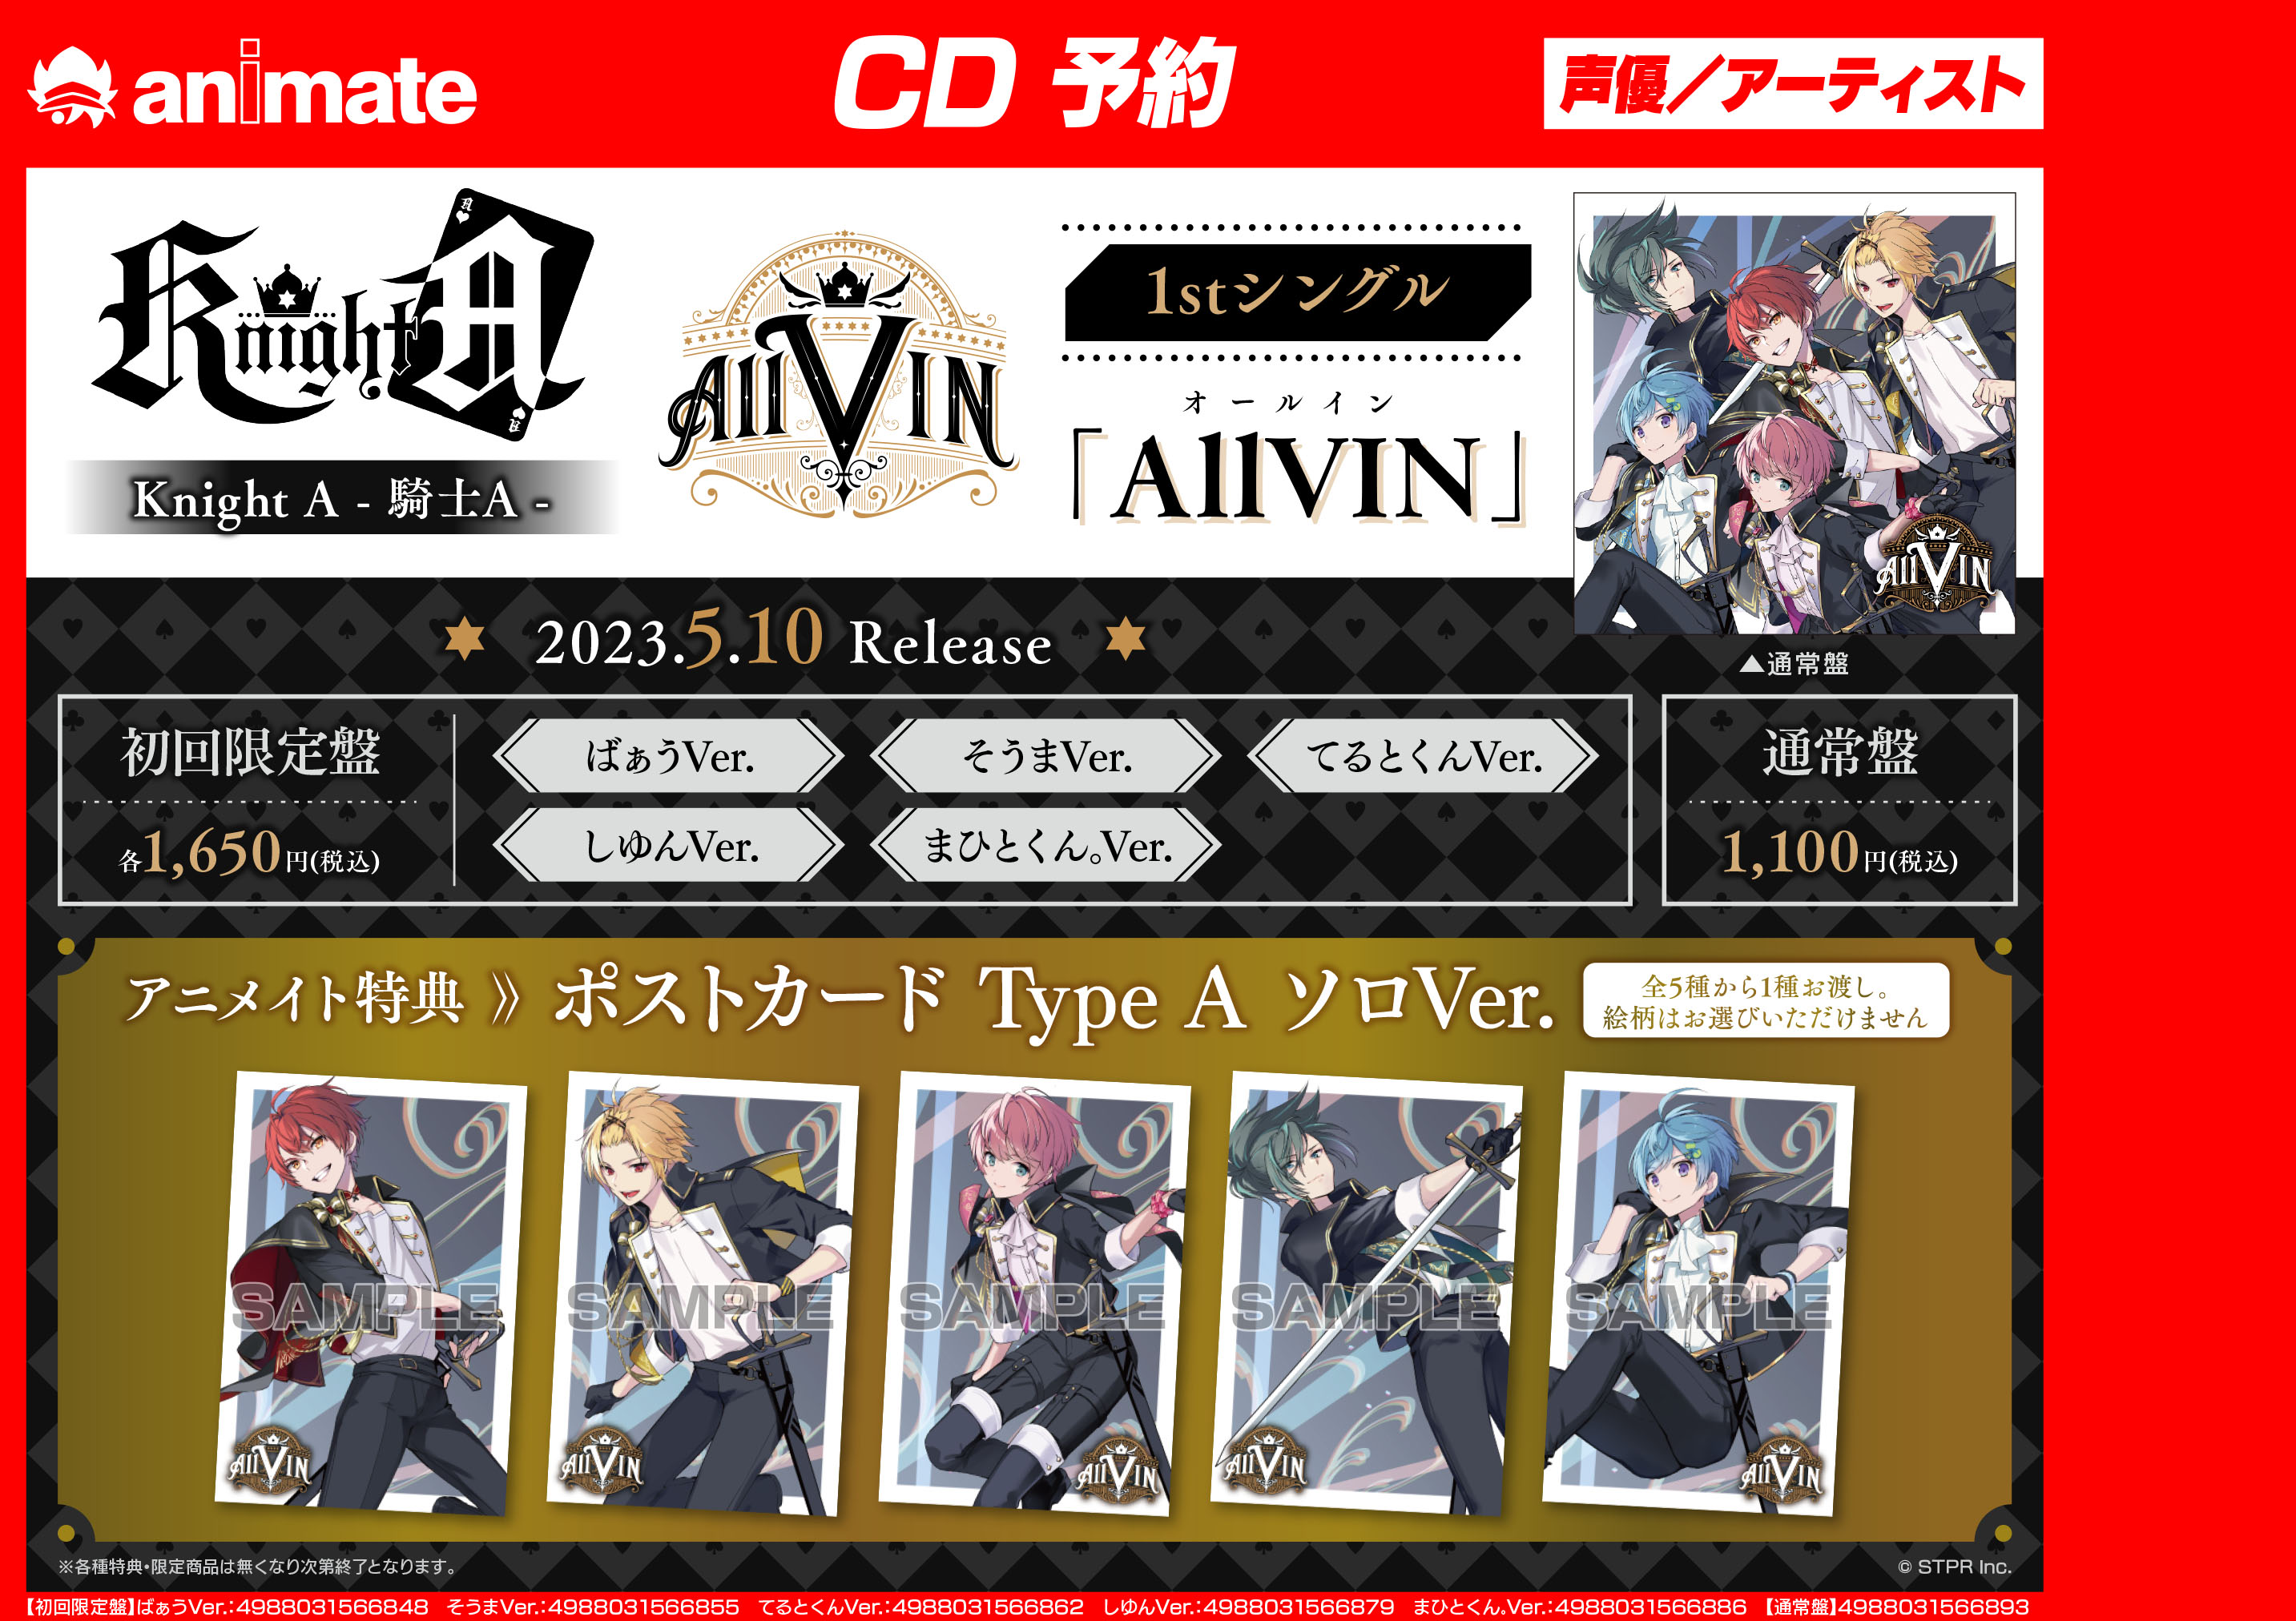 CD『Knight A - 騎士A - 1stシングル 「AllVIN」』予約受付中